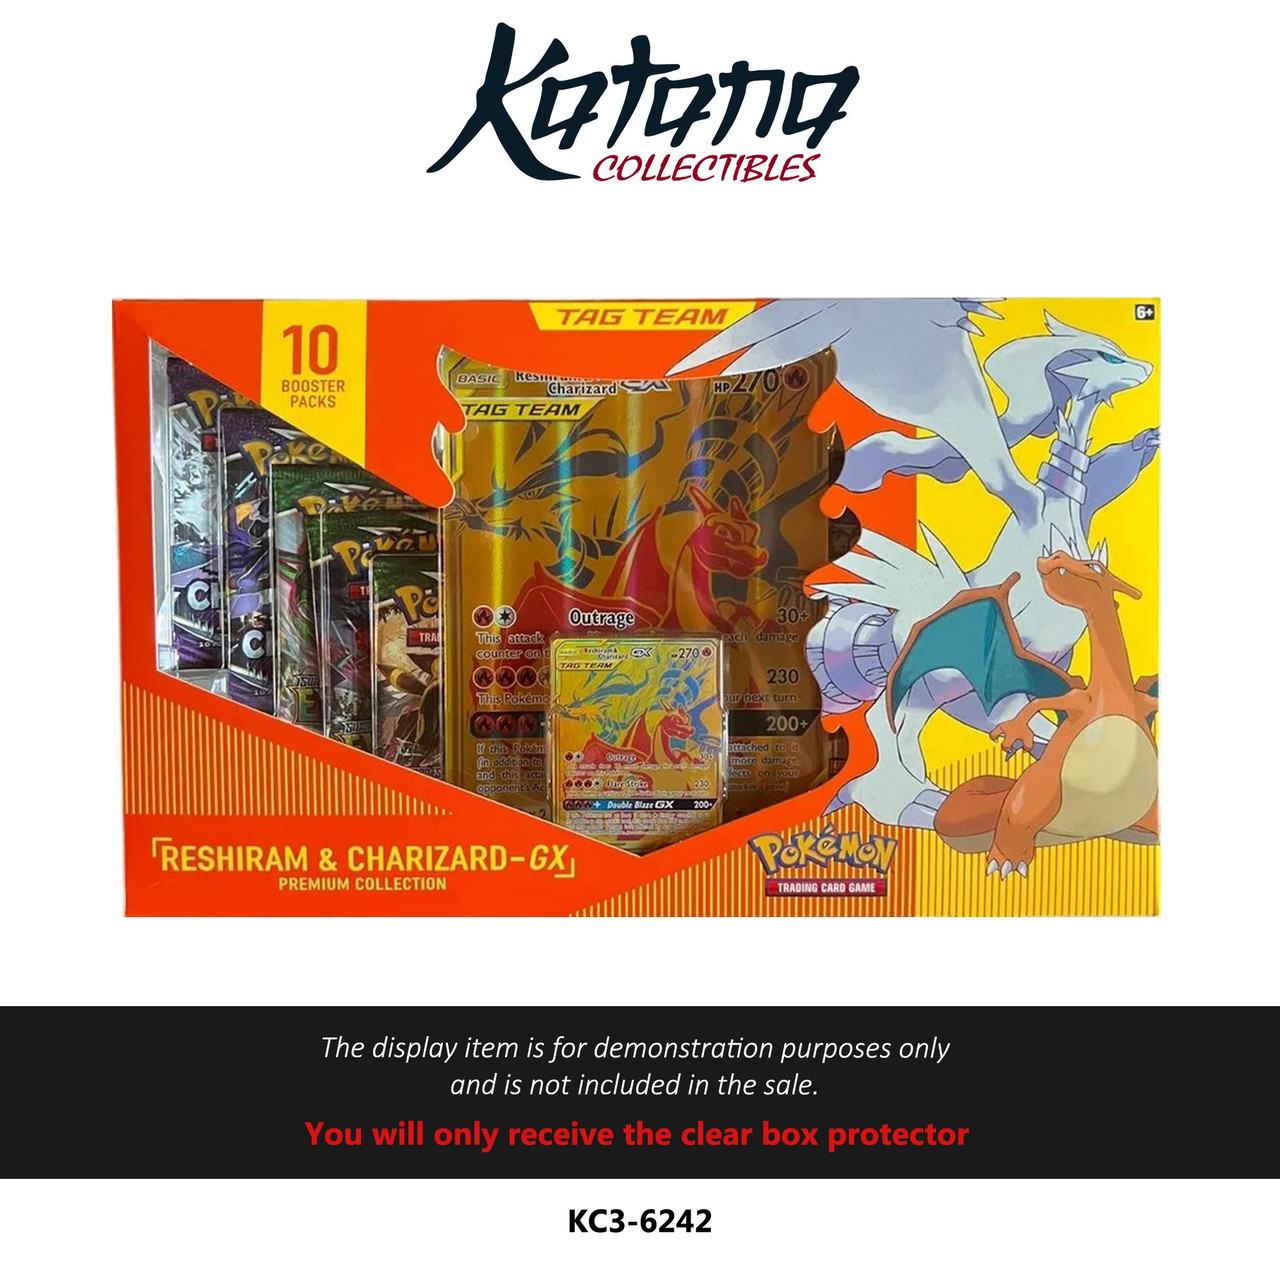 Katana Collectibles Protector For Pokemon Reshiram & Charizard Collection Box